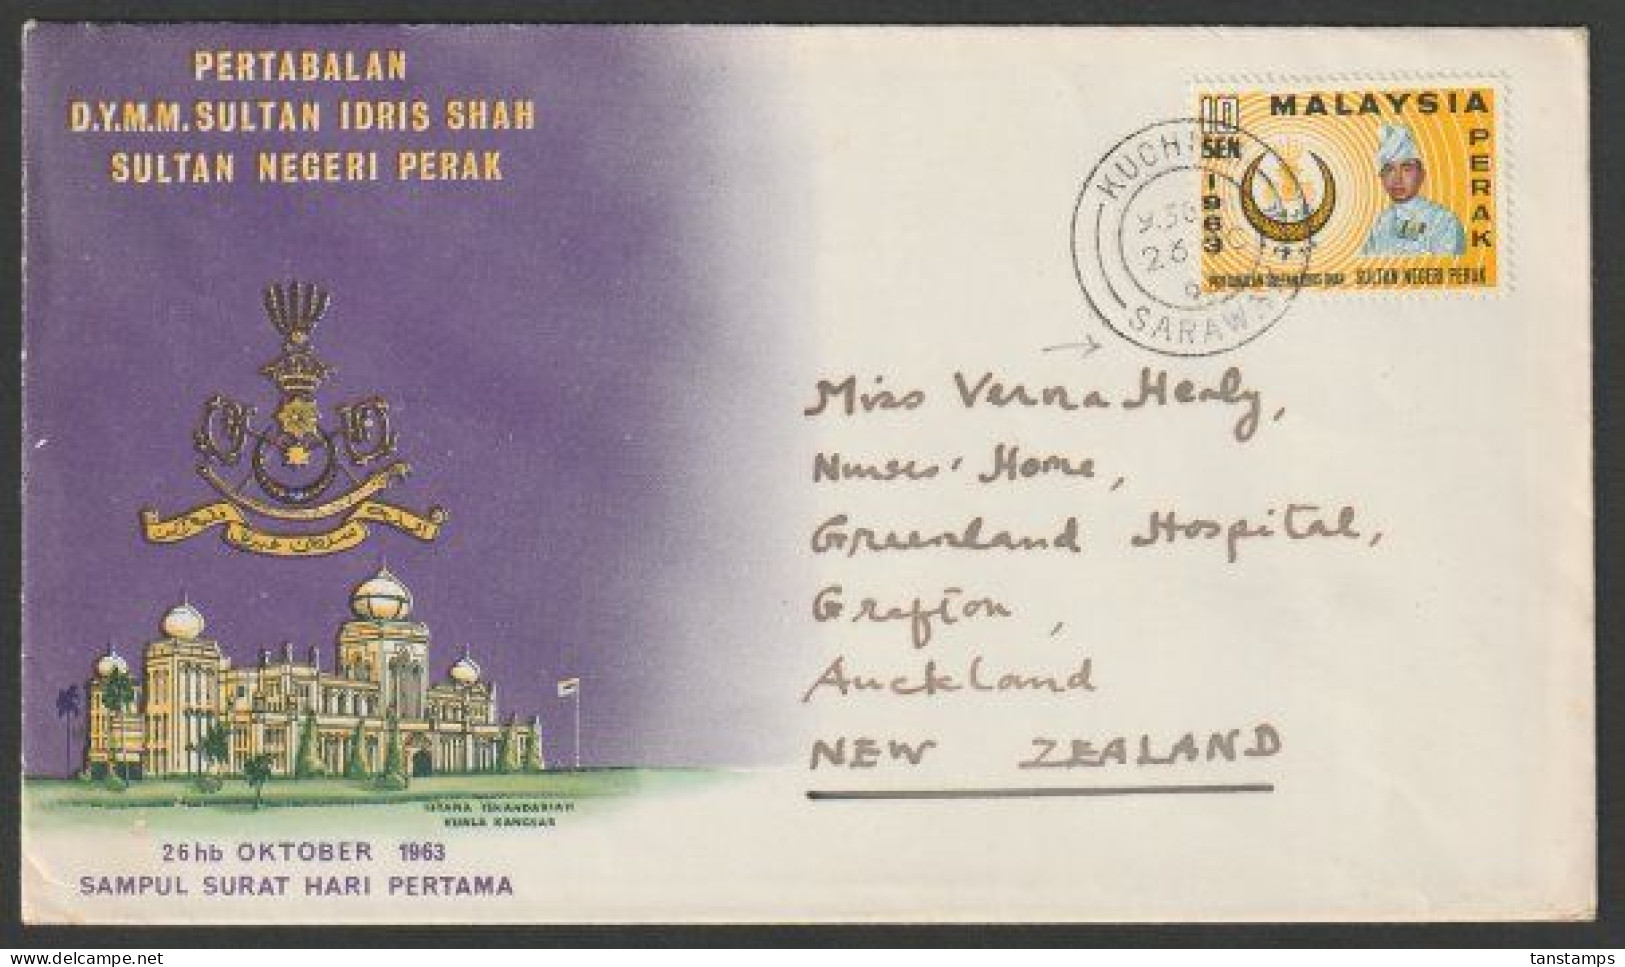 SARAWAK - NEW ZEALAND MALAYA 1963 SULTAN IDRIS SHAH FDC - Sarawak (...-1963)